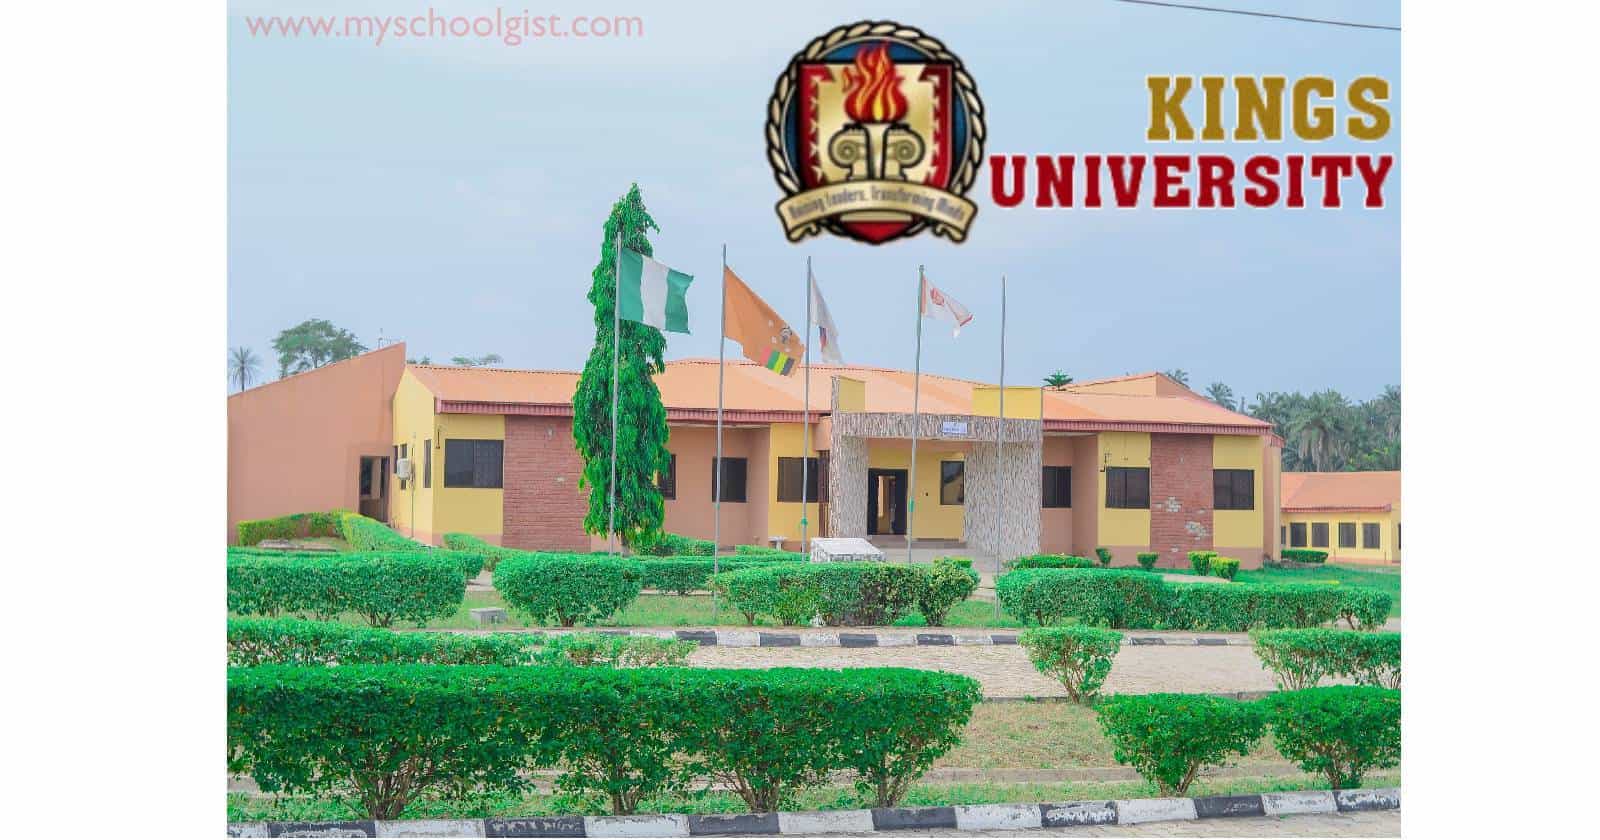 Kings University Matriculation Ceremony Schedule